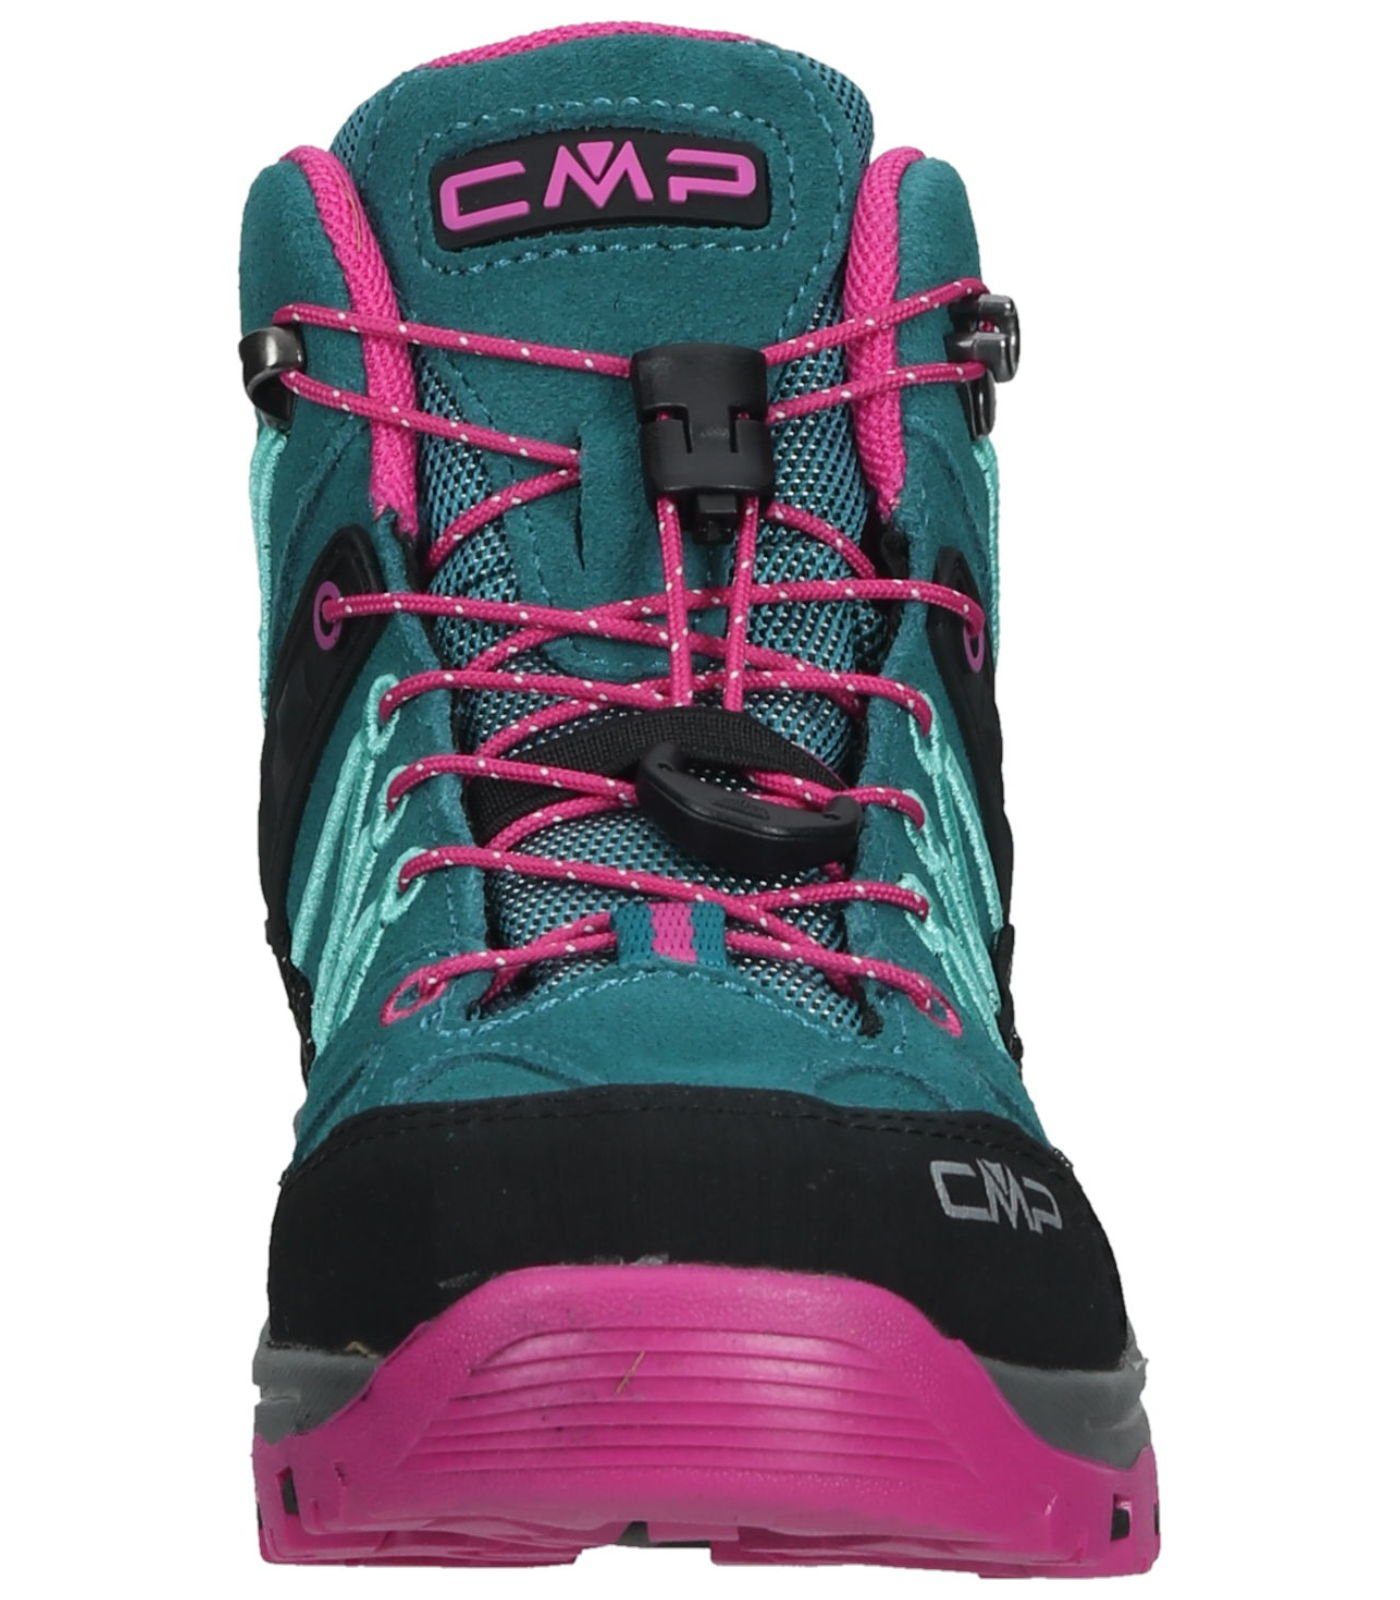 CMP Boots Leder/Textil Pink Schwarz Winterstiefel